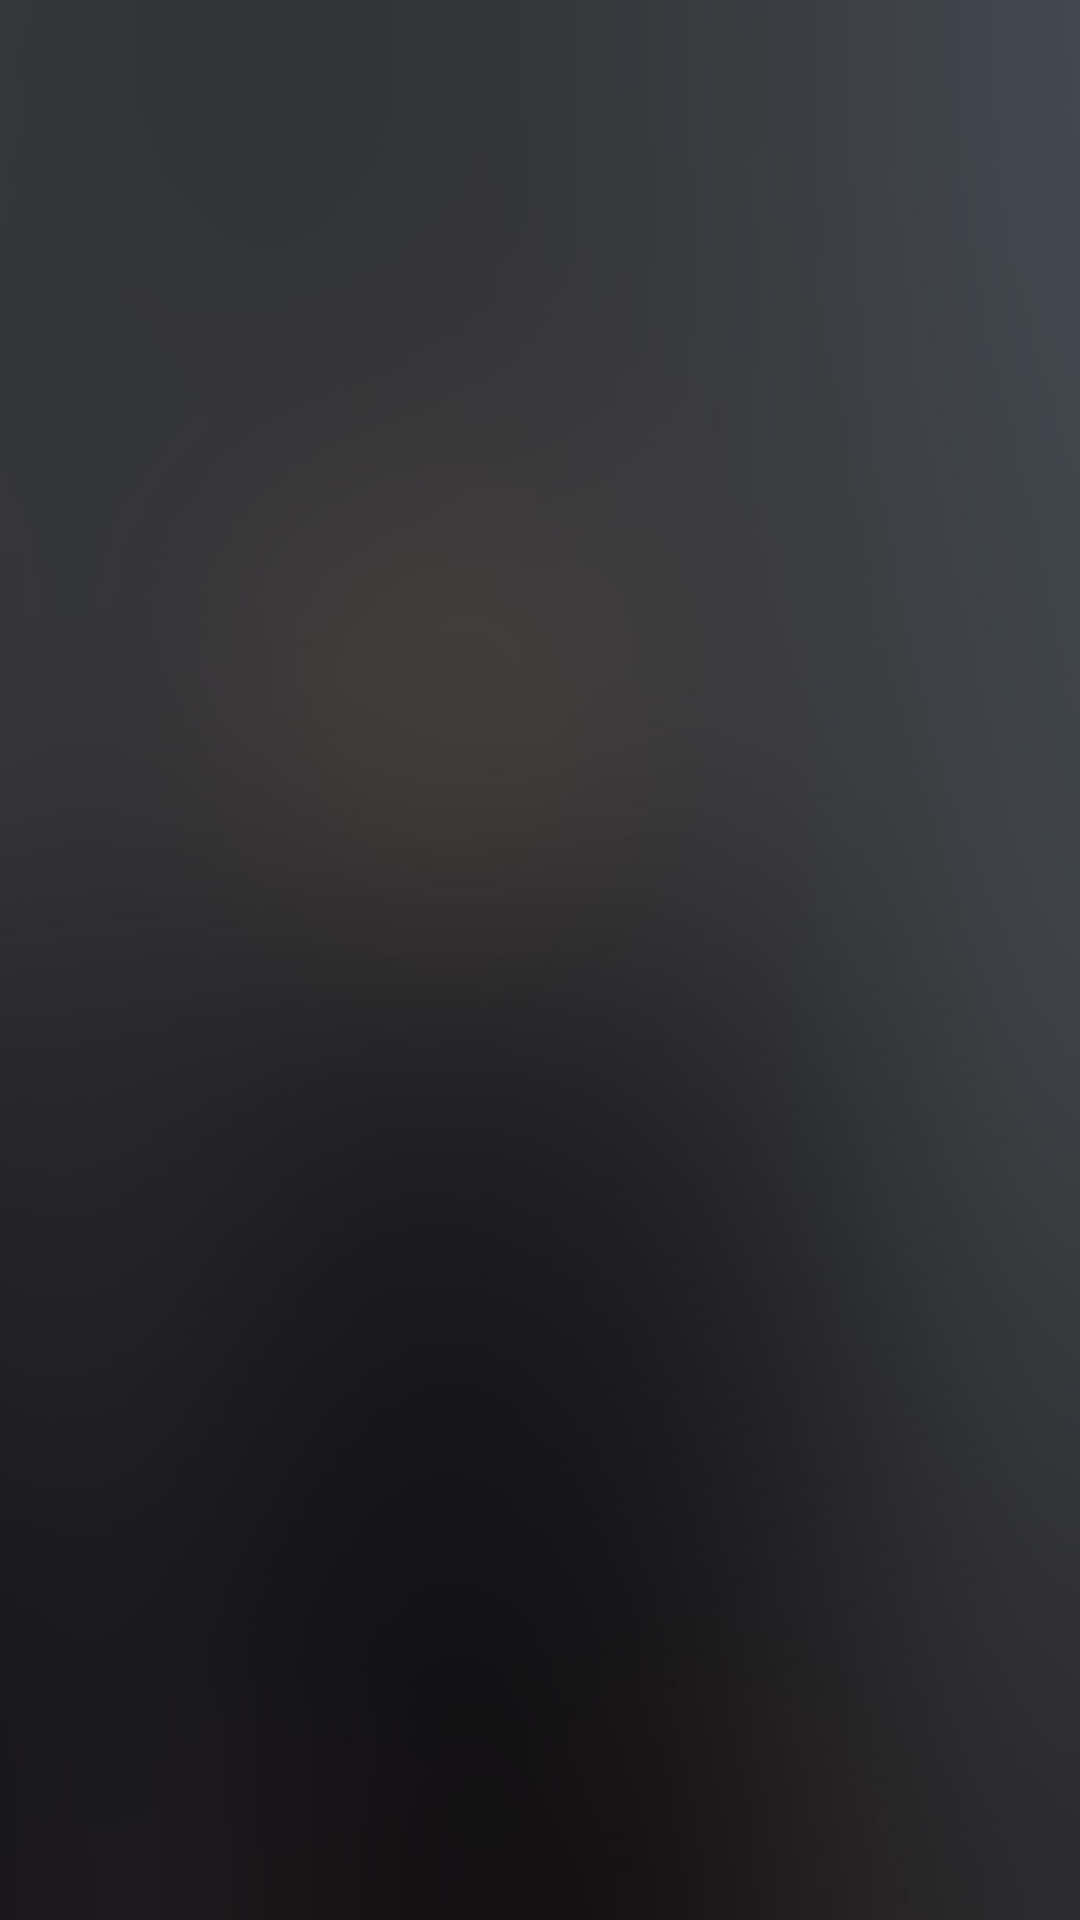 Free Black Blur Wallpaper Downloads, [100+] Black Blur Wallpapers for FREE  